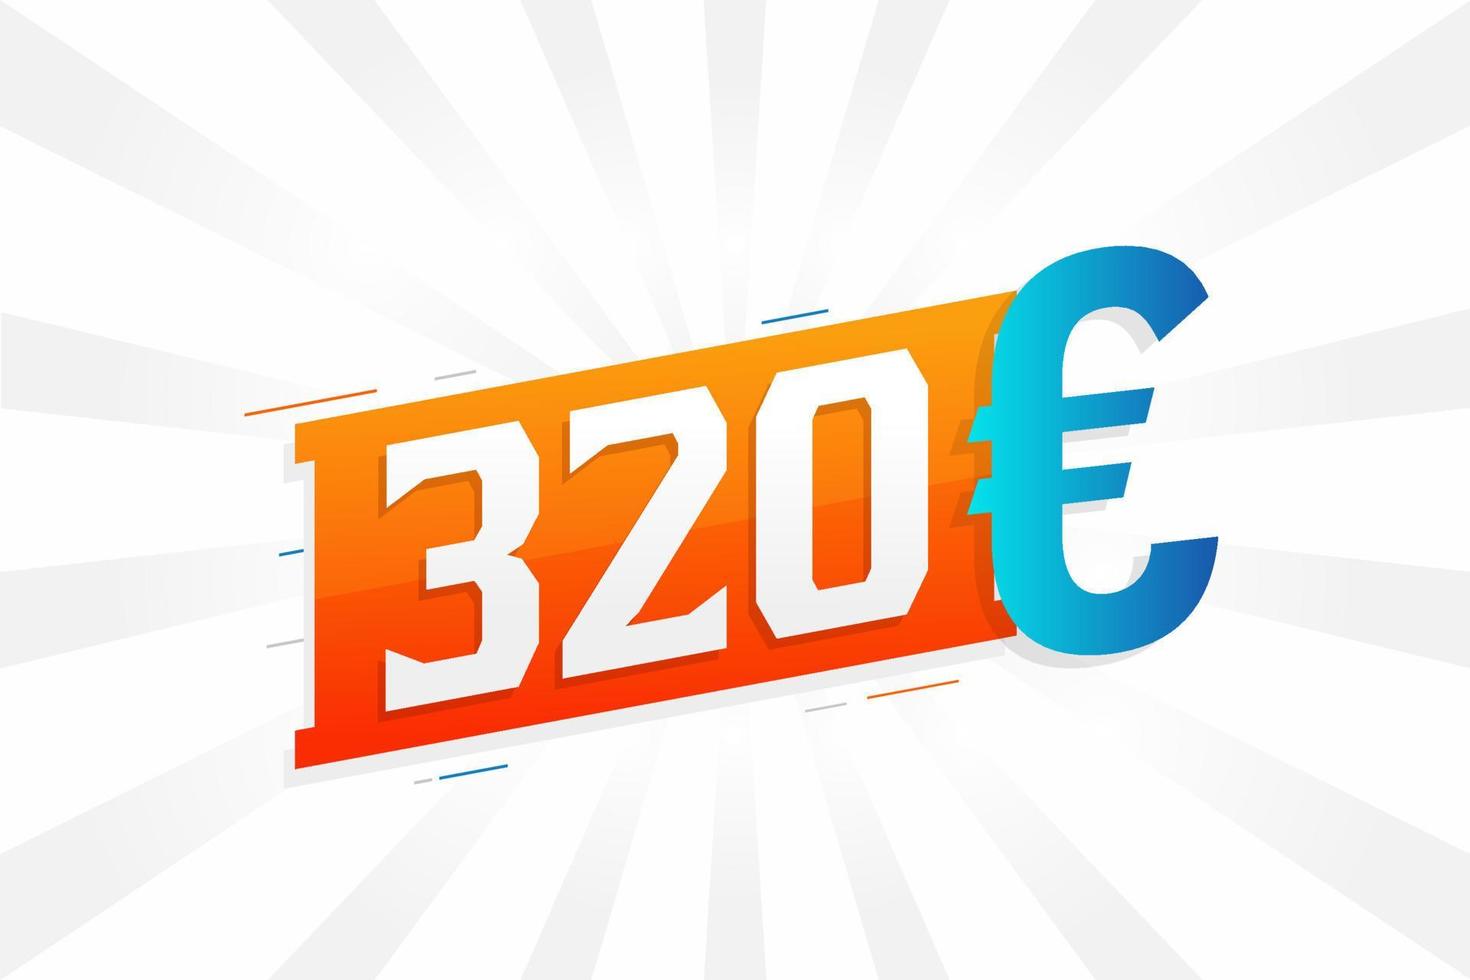 320 euro valuta vektor text symbol. 320 euro europeisk union pengar stock vektor